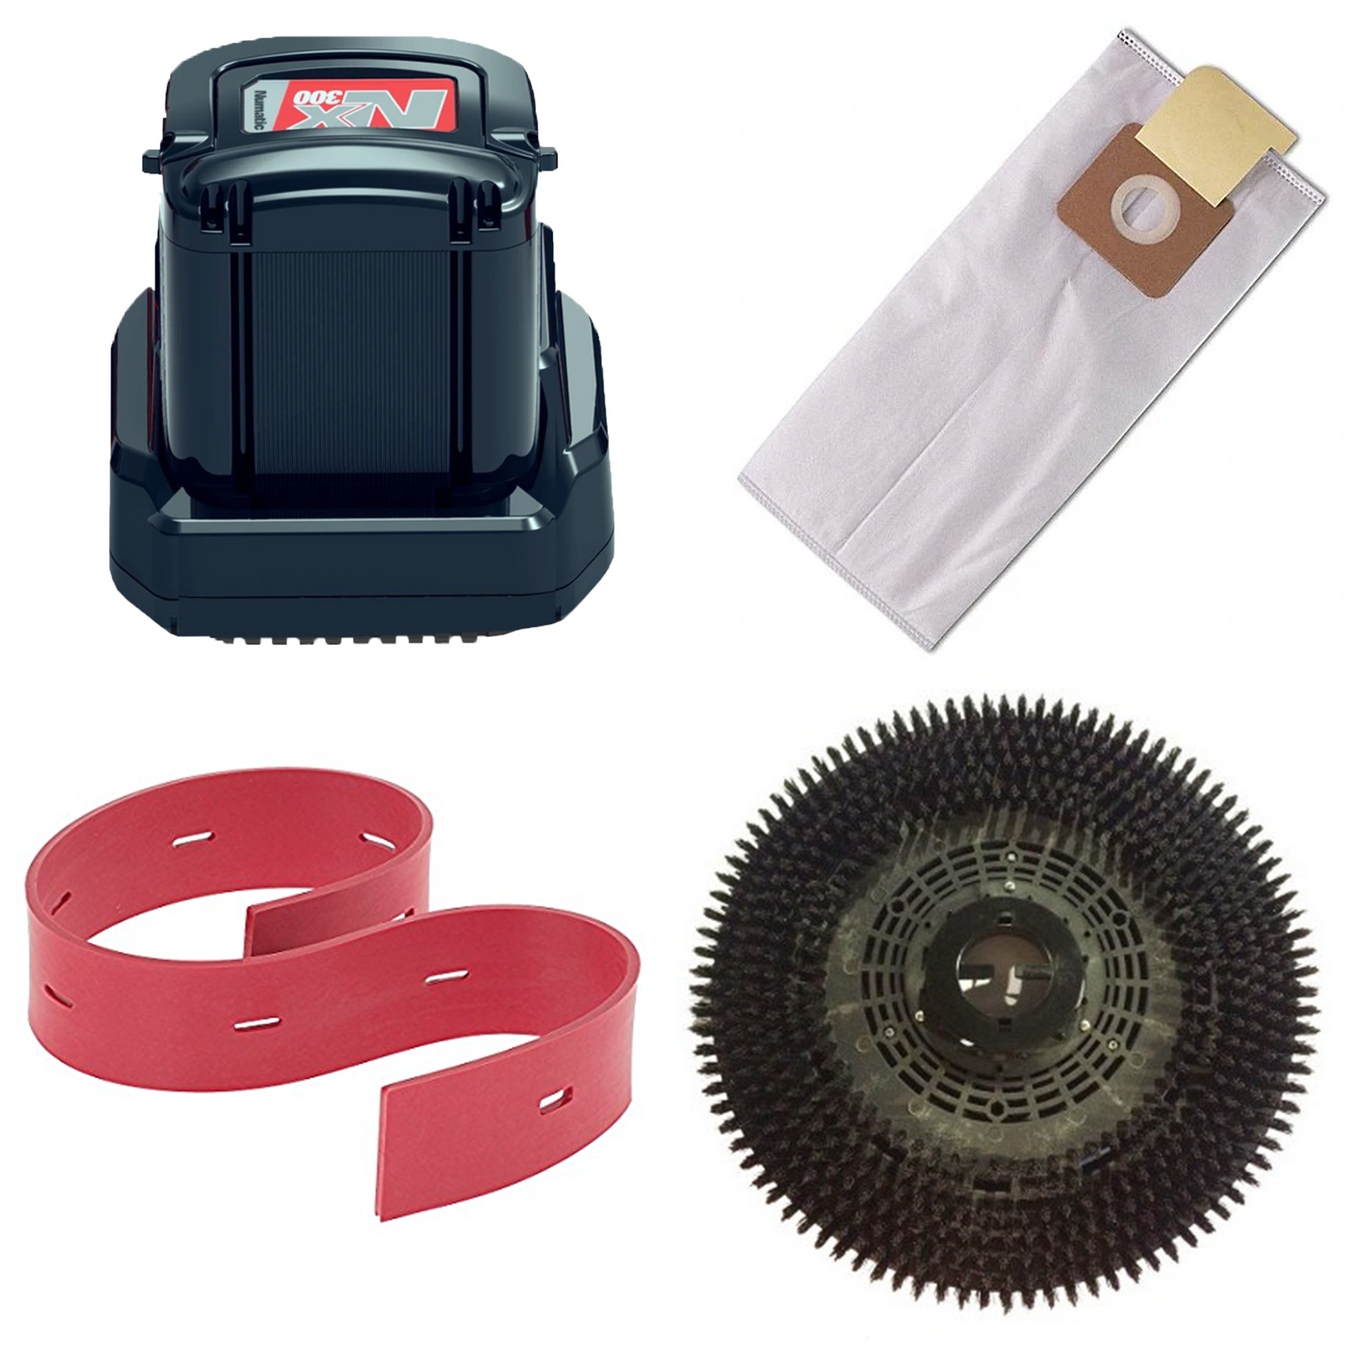 Equipment - Supplies & Accessories